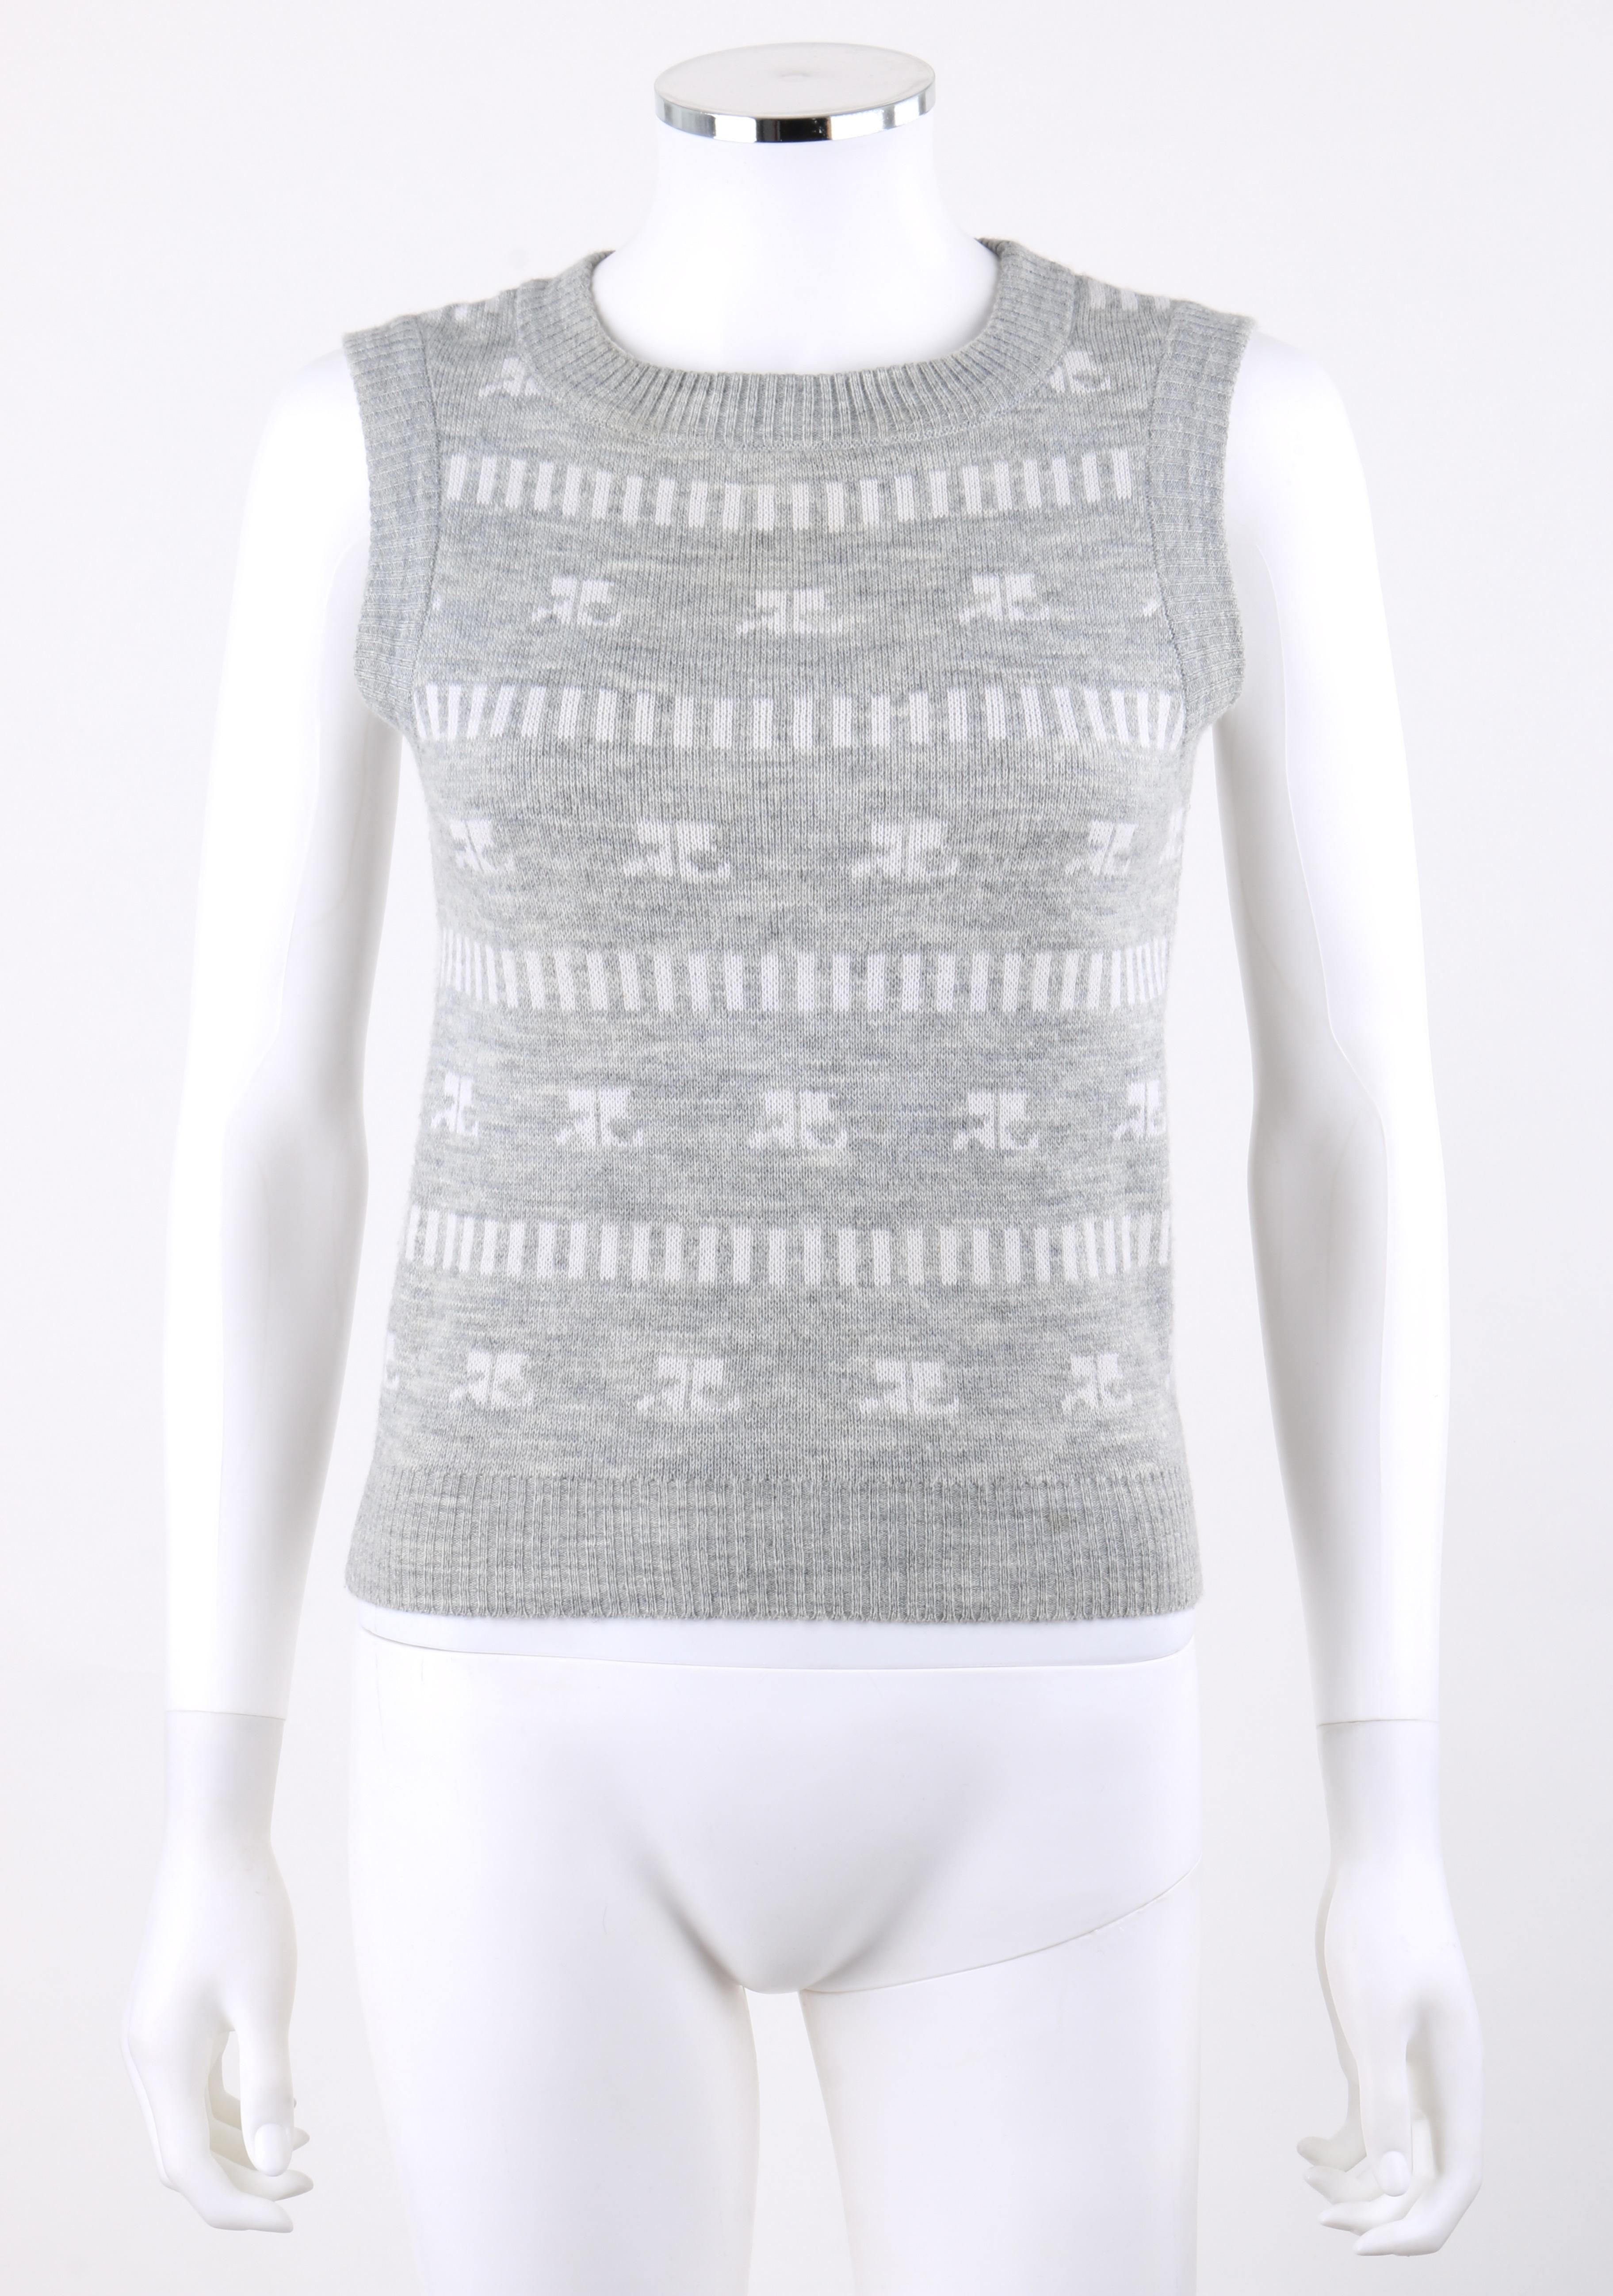 DESCRIPTION: COURREGES c.1970's Grey & White Logo Signature Print Knit Sweater Vest 
 
Circa: c.1970's
Label(s): Courreges Paris
Style: Sweater vest
Color(s): Grey and white
Lined: No
Marked Fabric Content: 100% acrylic
Additional Details /